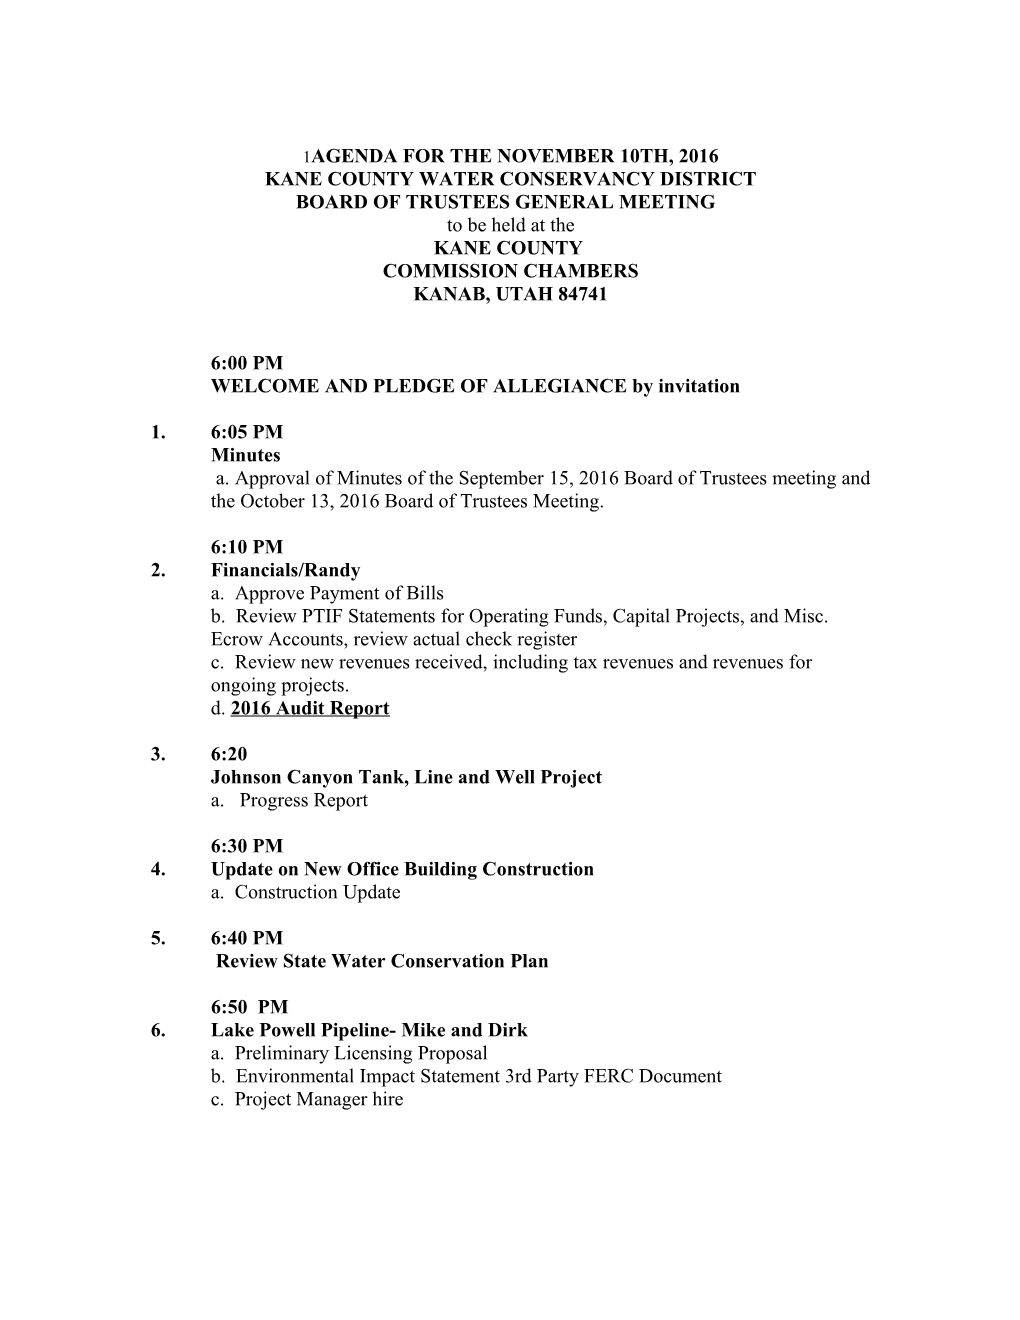 Agenda for the April 19, 2008